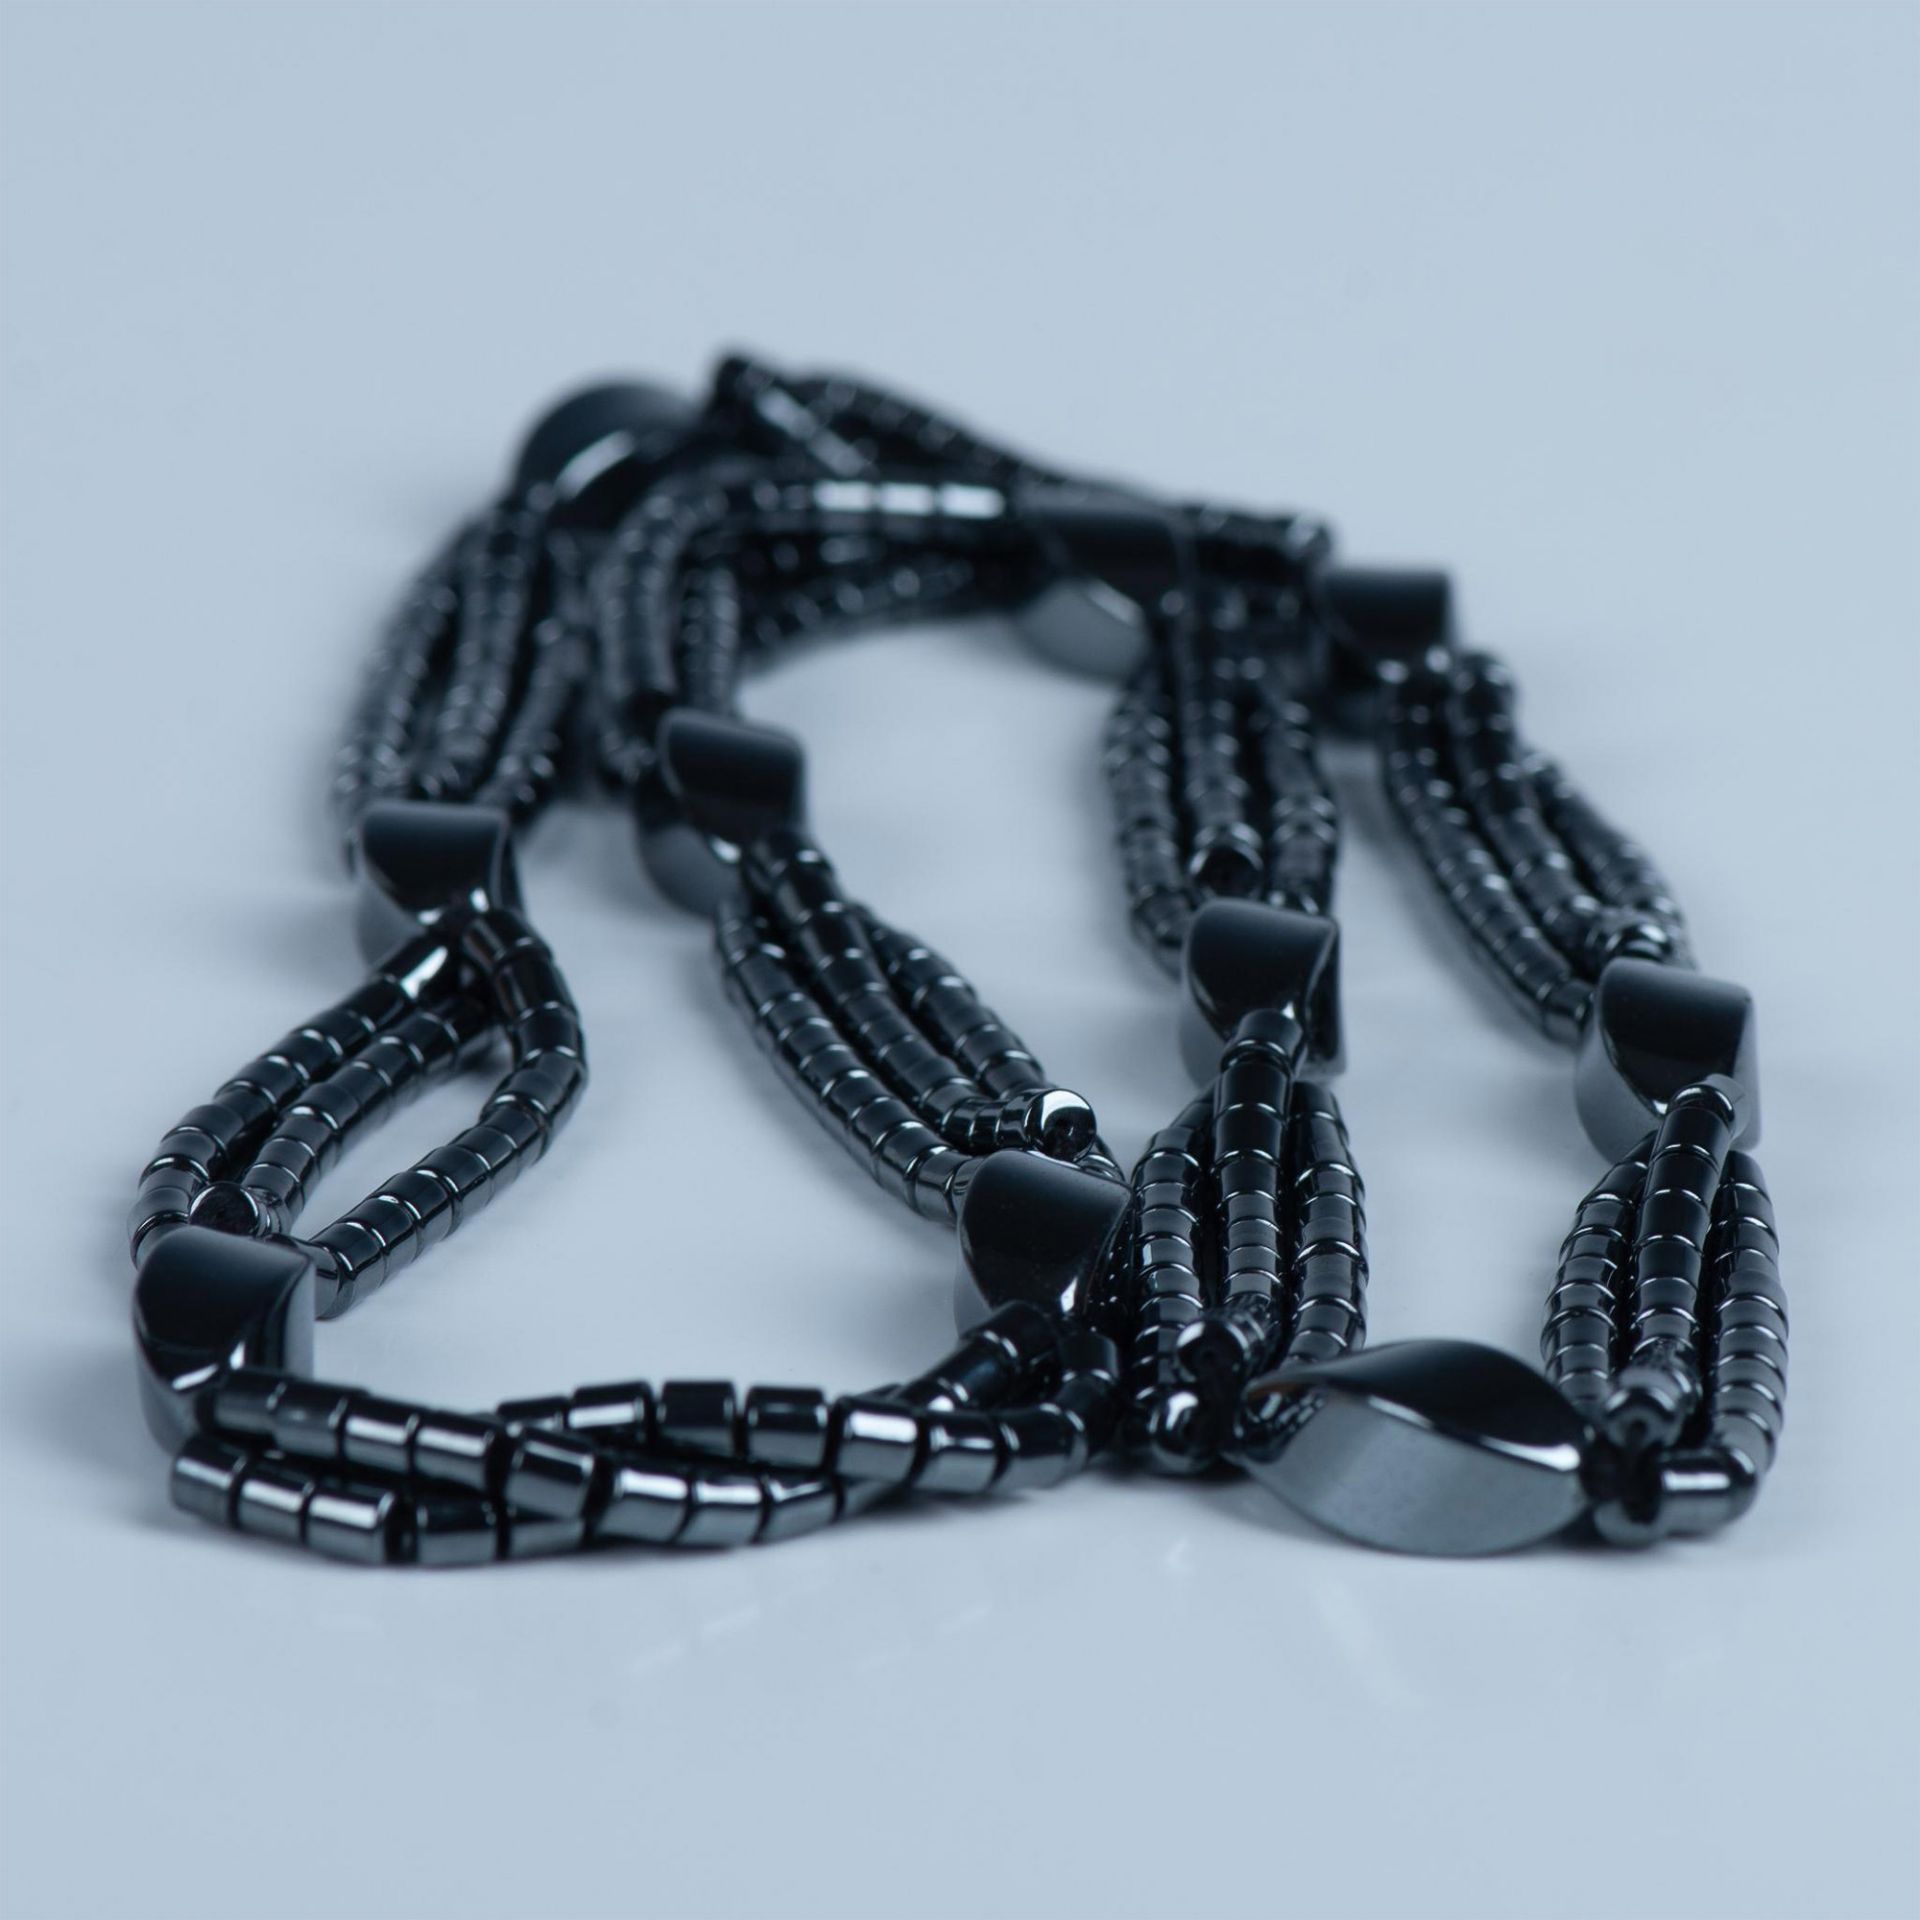 Contemporary Hematite Bead Necklace - Image 3 of 4